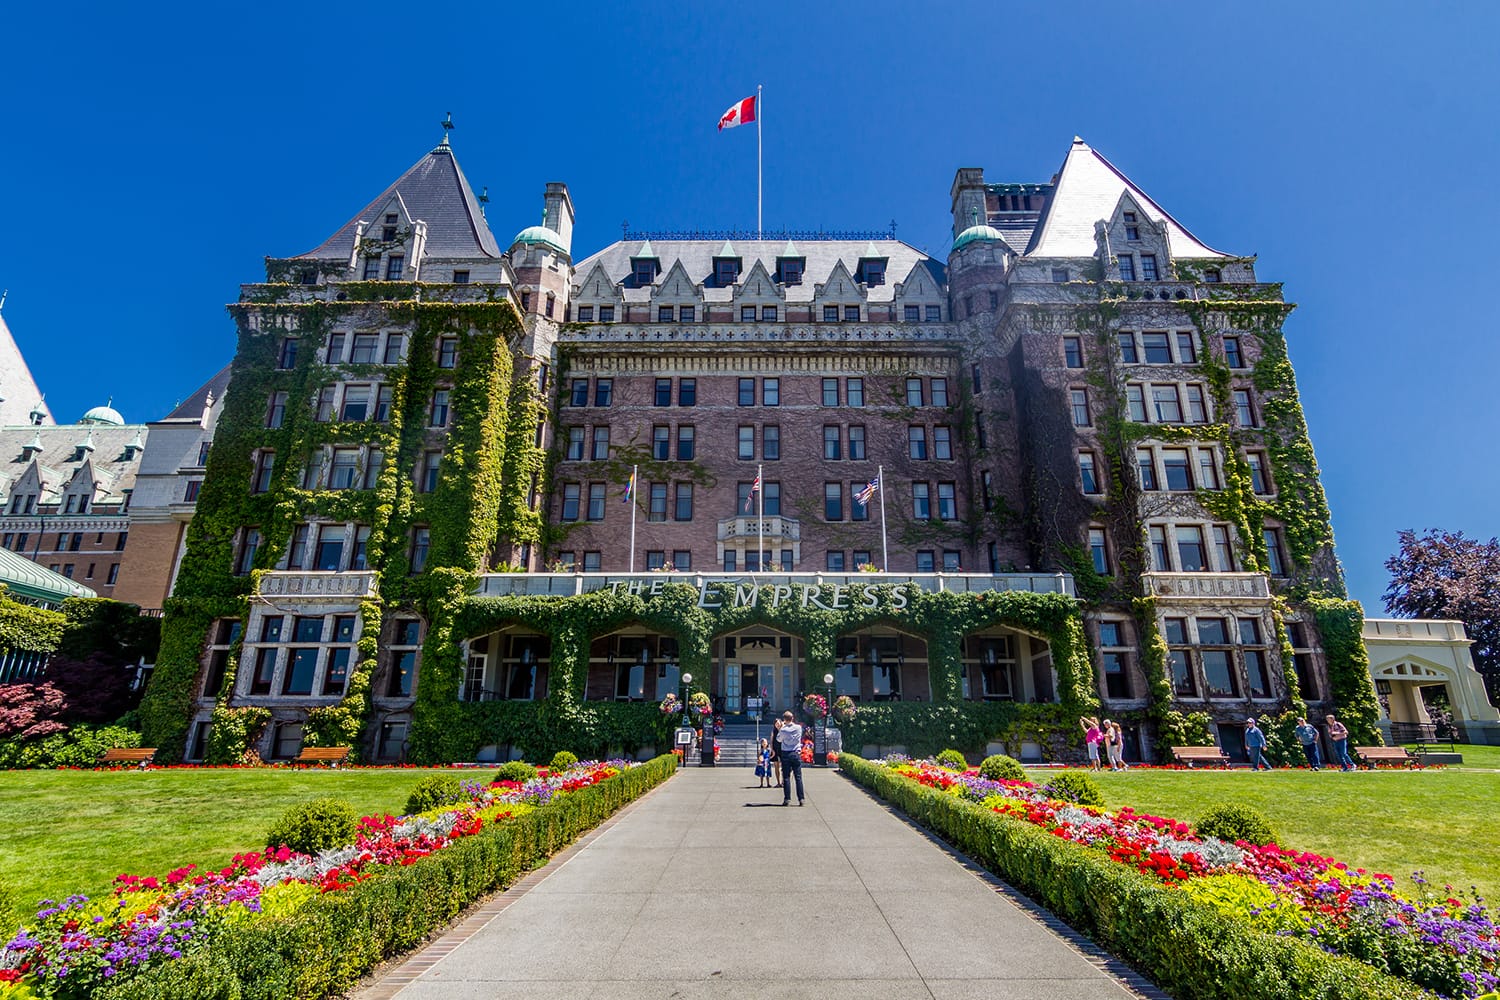 Fairmont Empress Hotel, Victoria, BC, Canadà